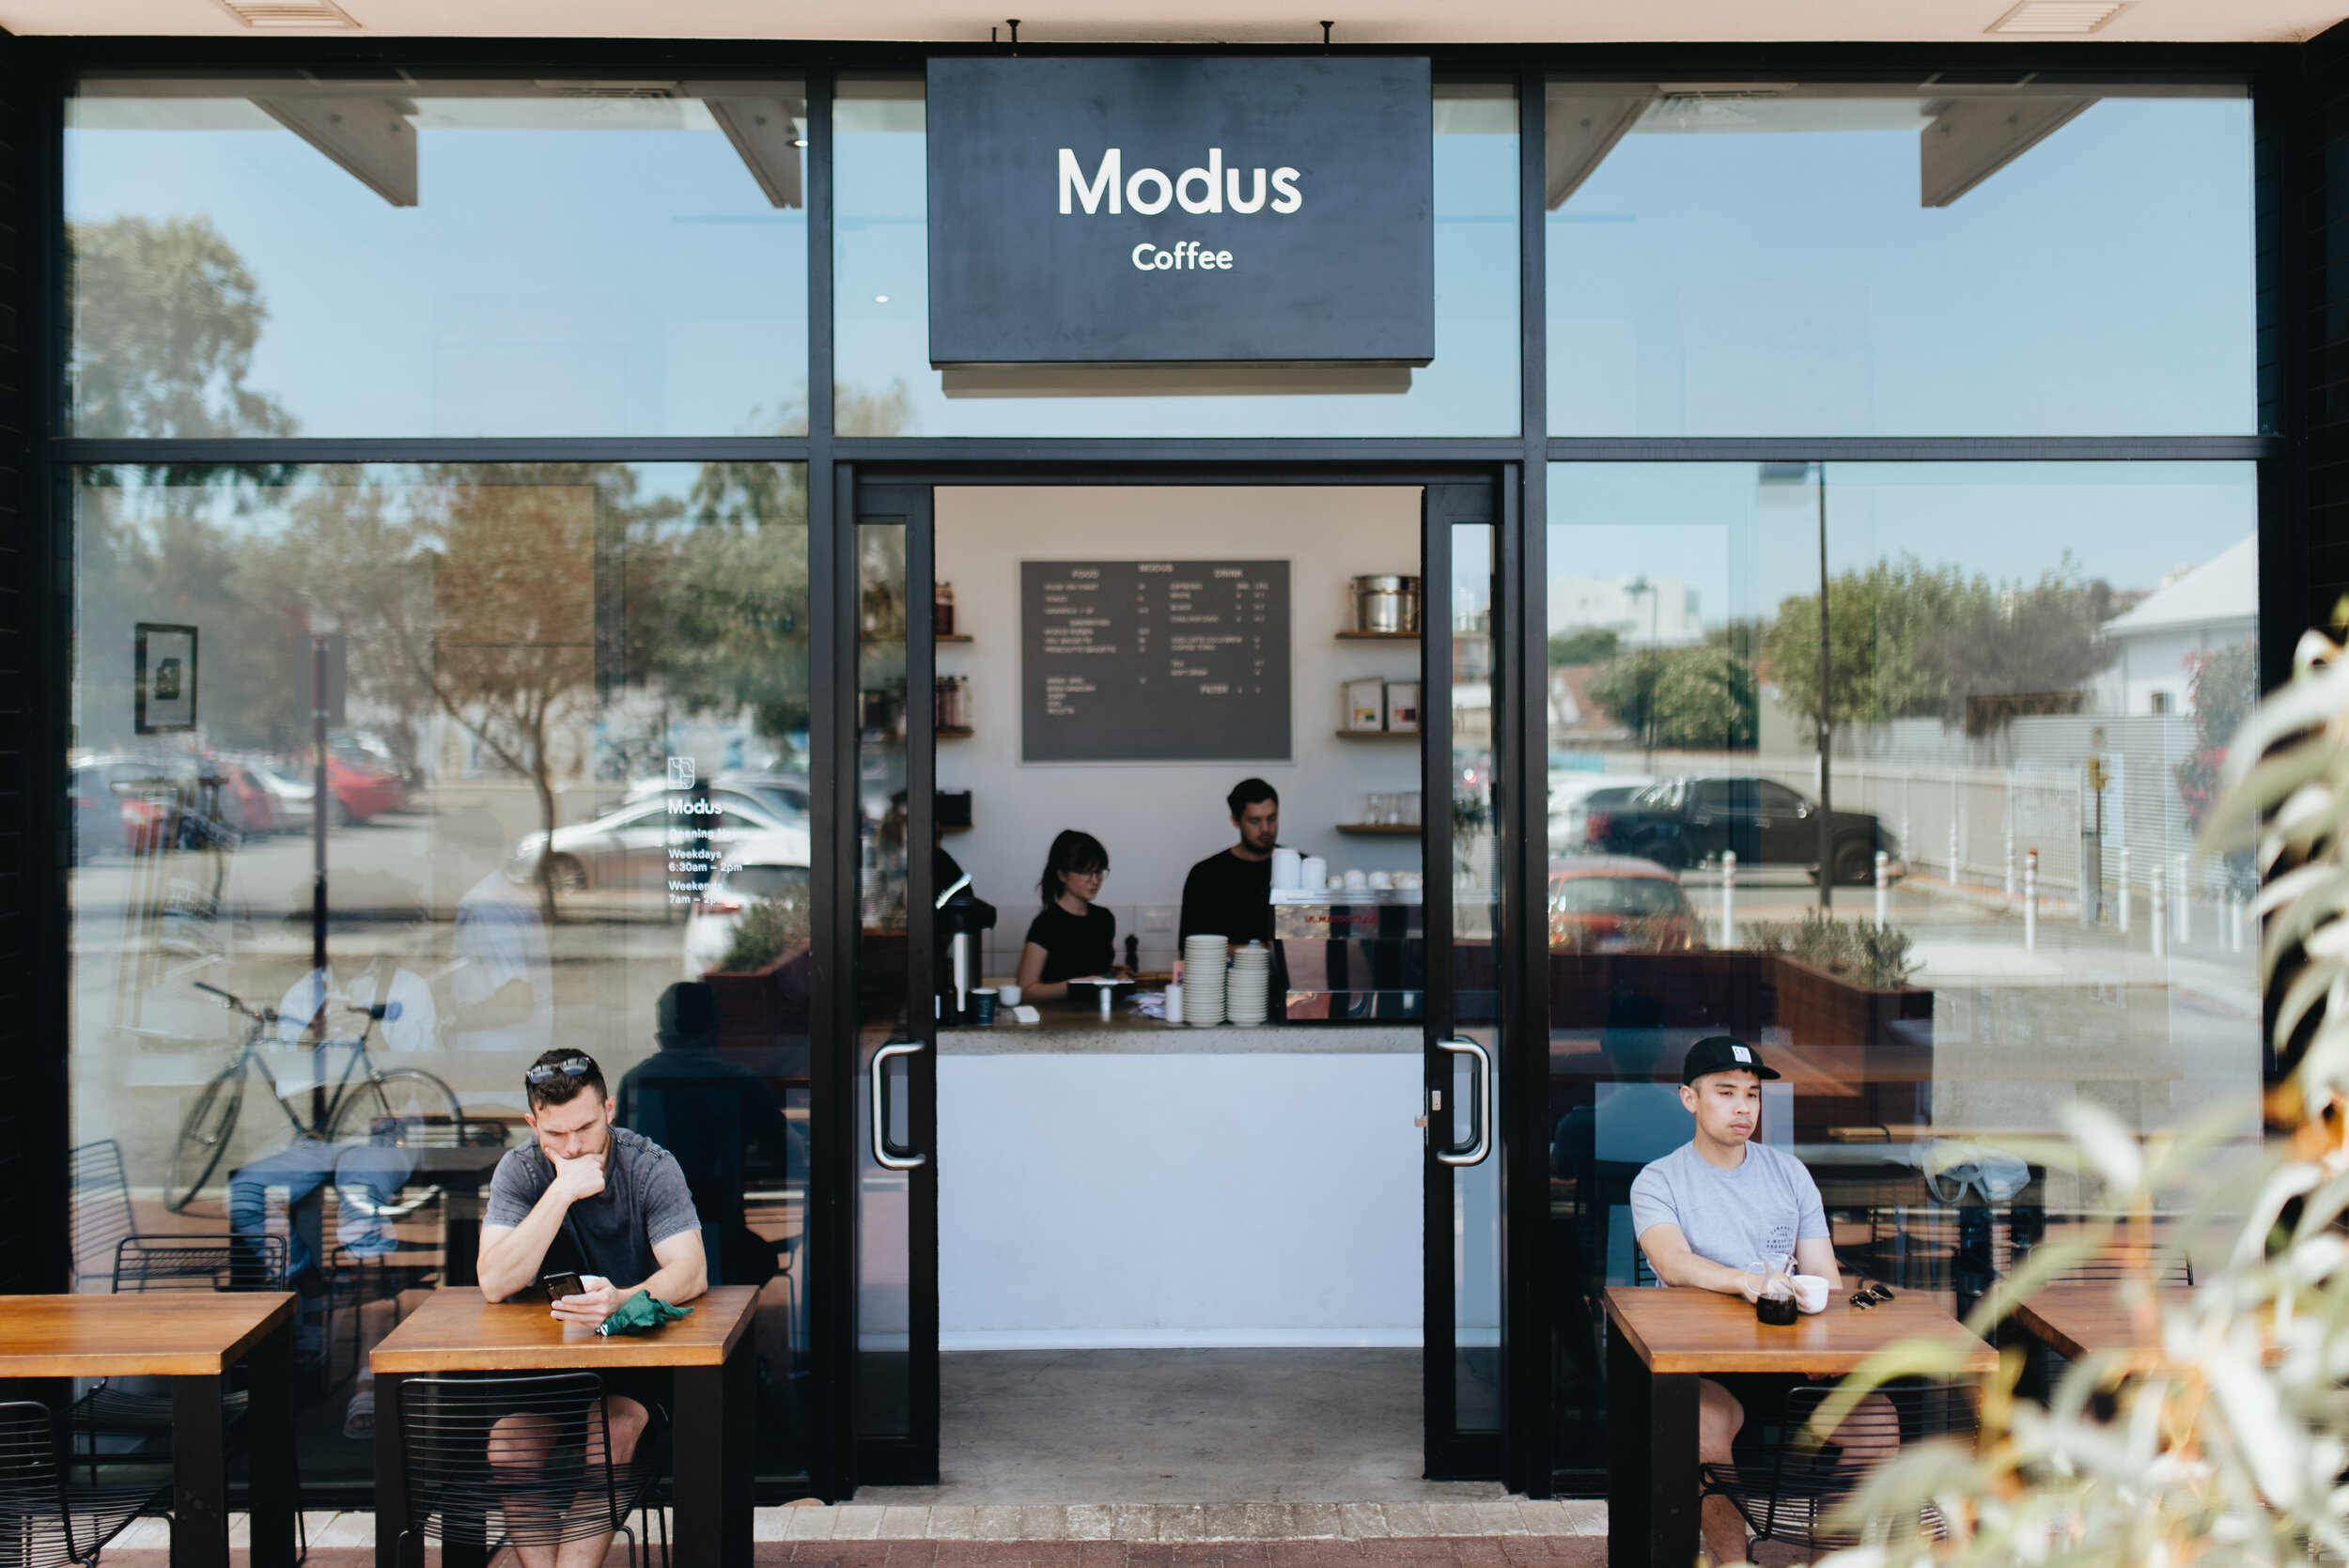 Modus Coffee in Mount Lawley, Perth.